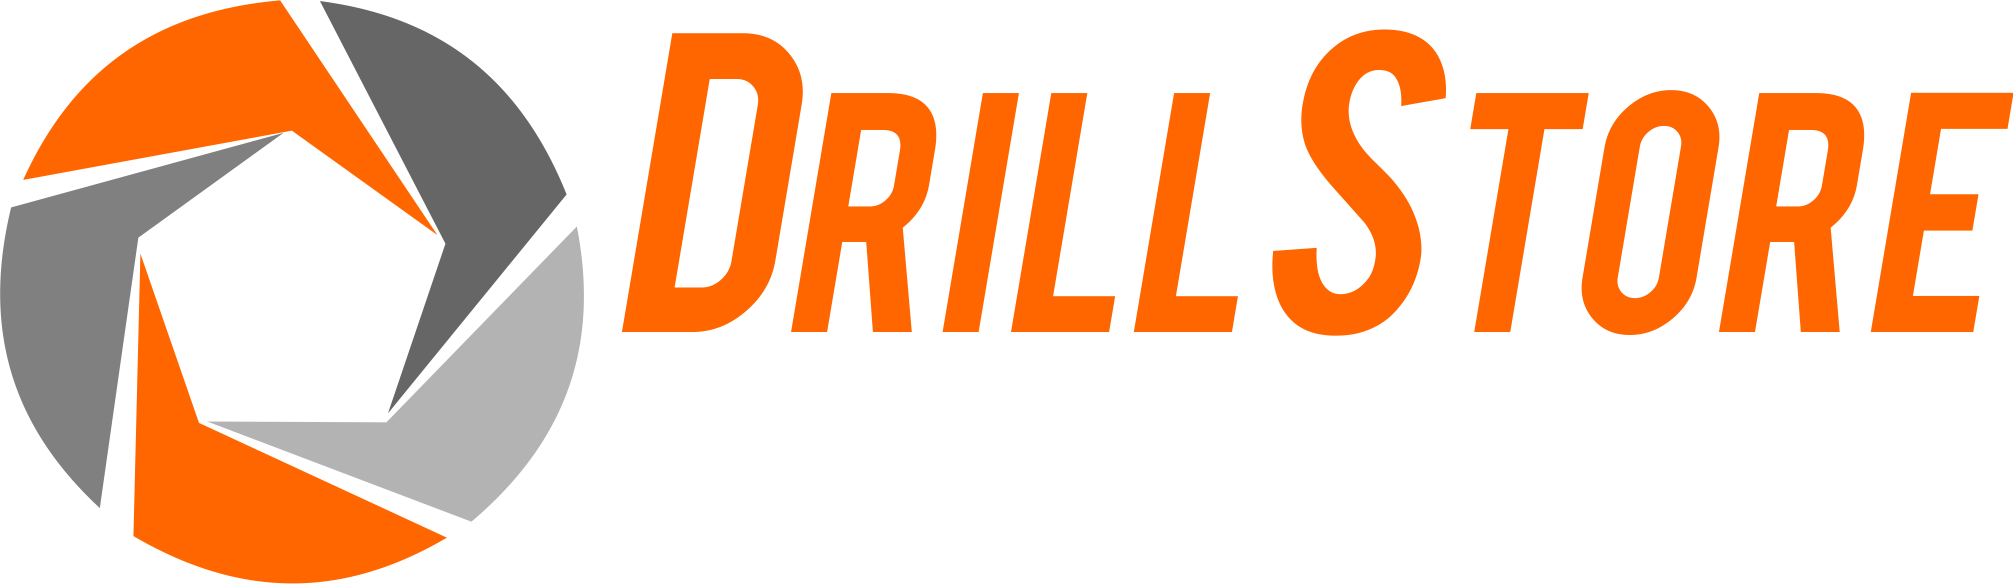 Drill Store Europe - Pavement (2013x588)